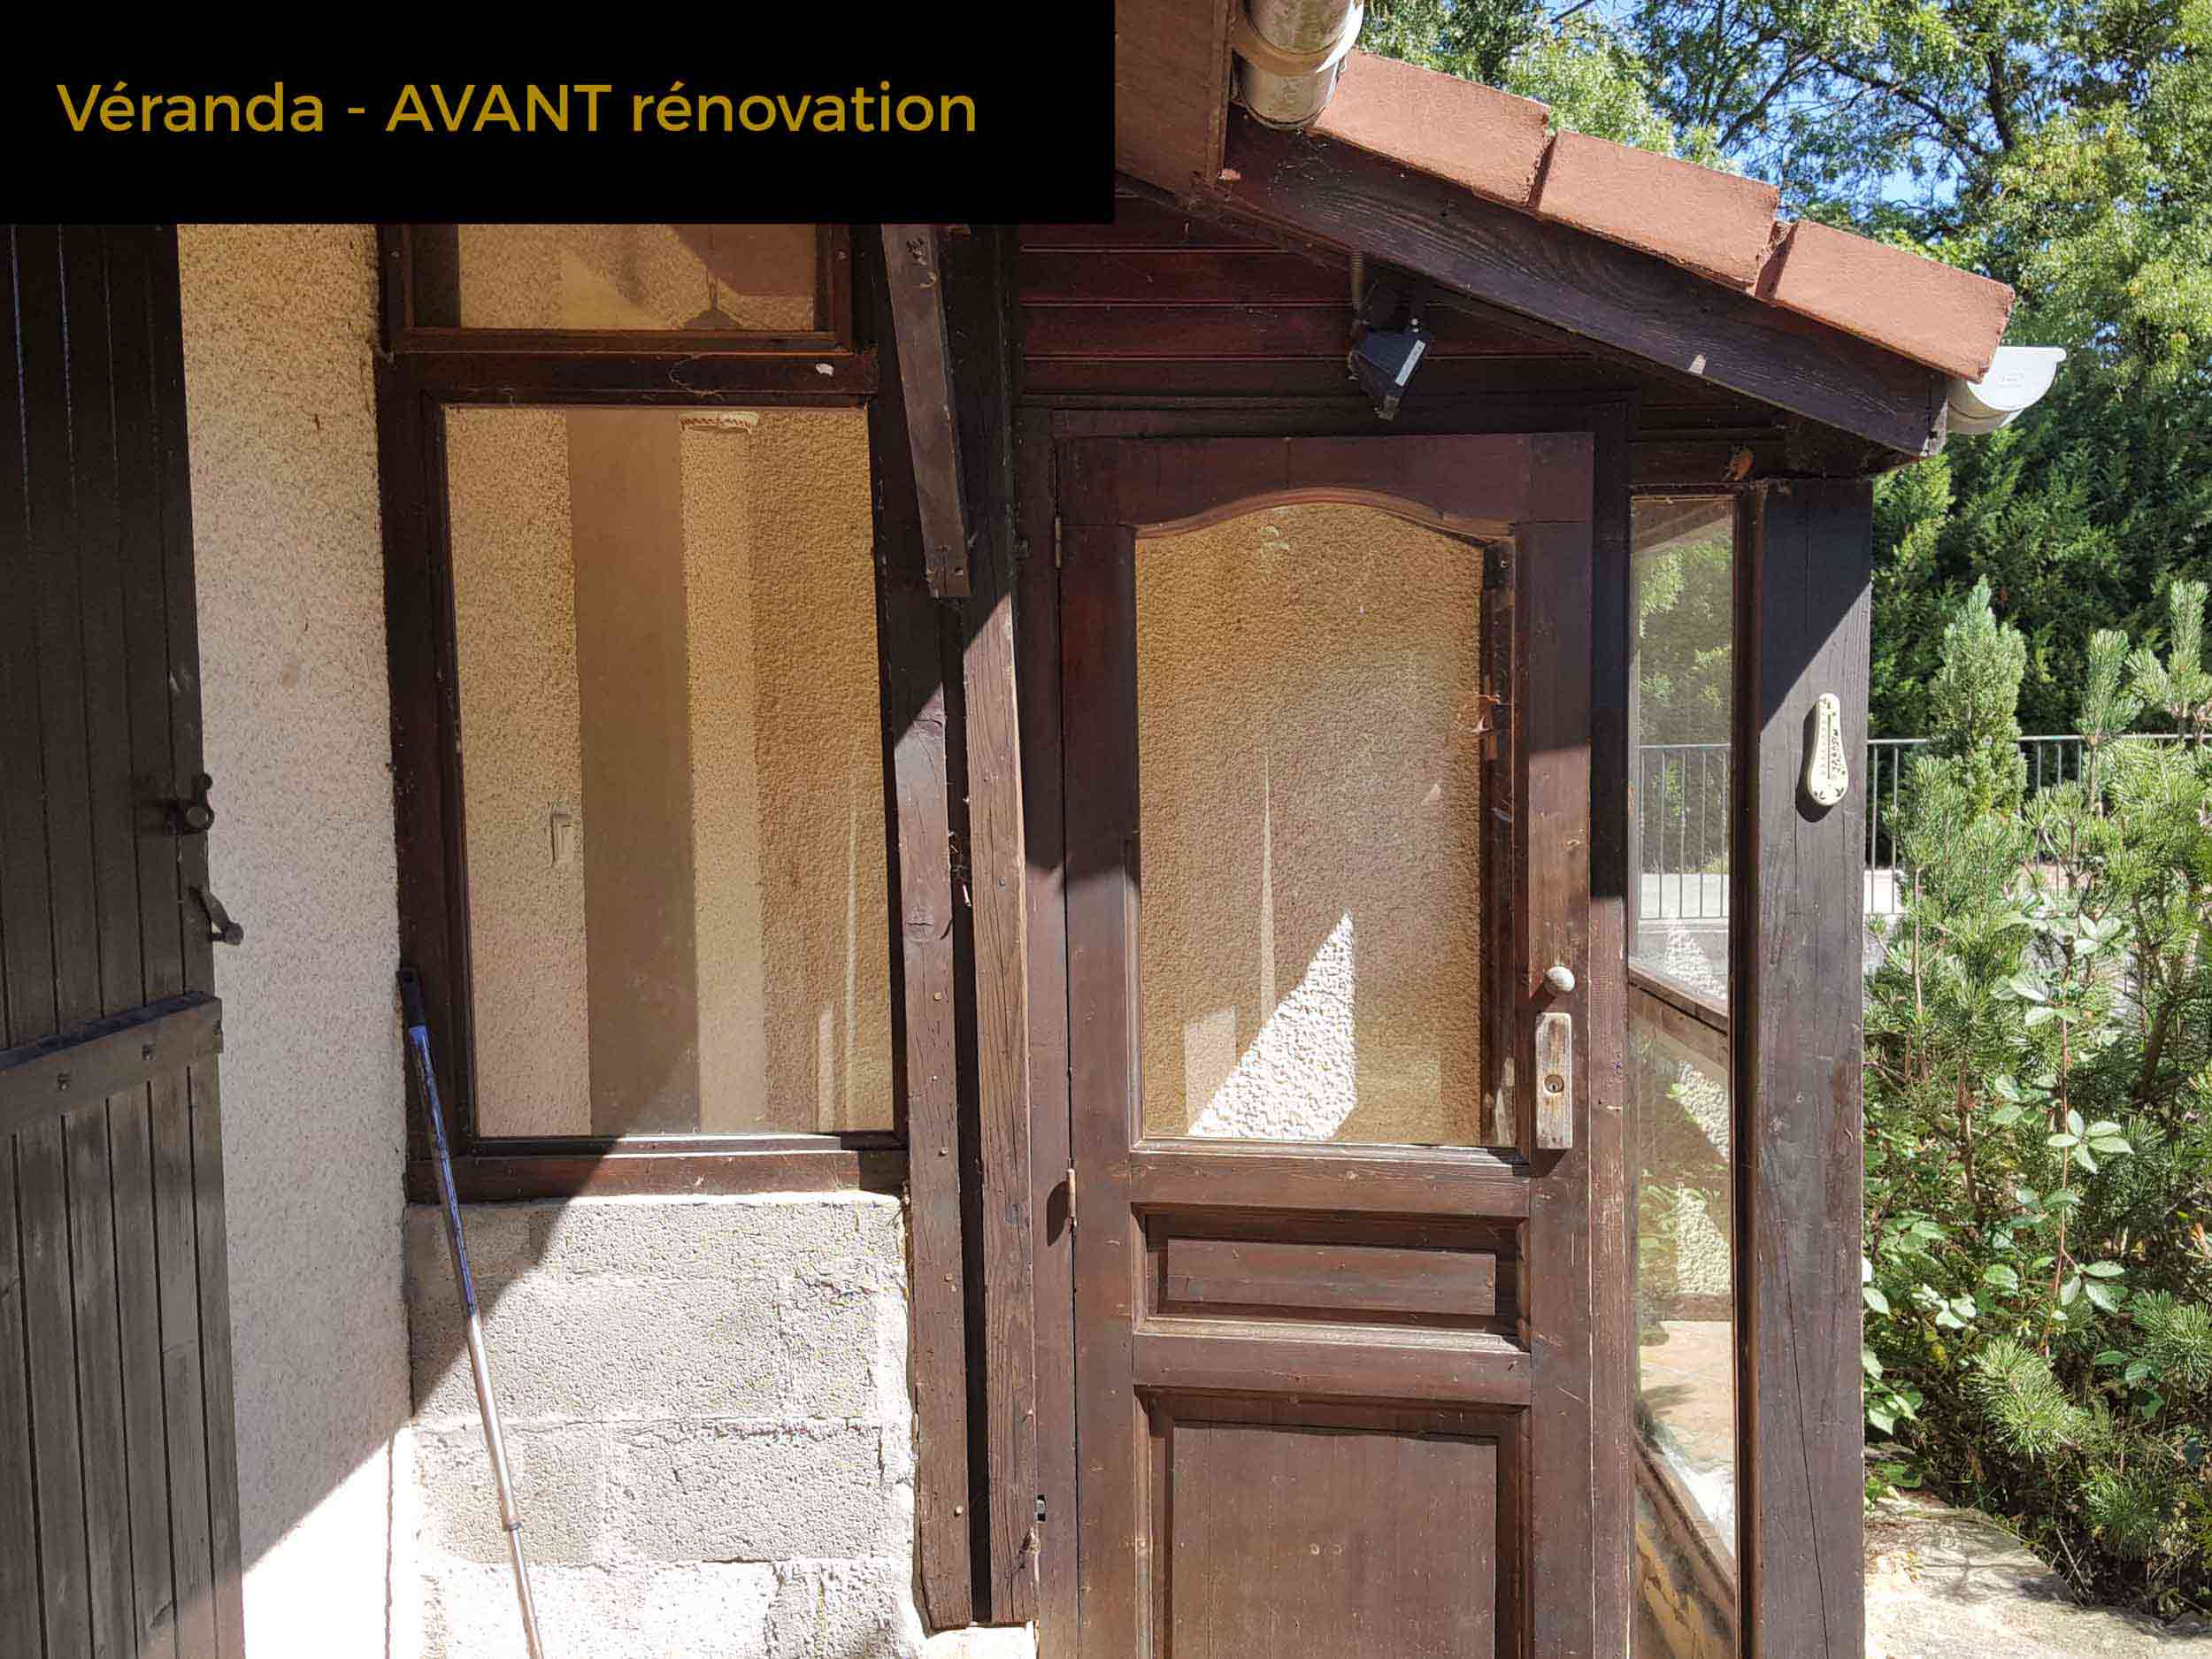 1-renovation-veranda-bois-villefranche-avant